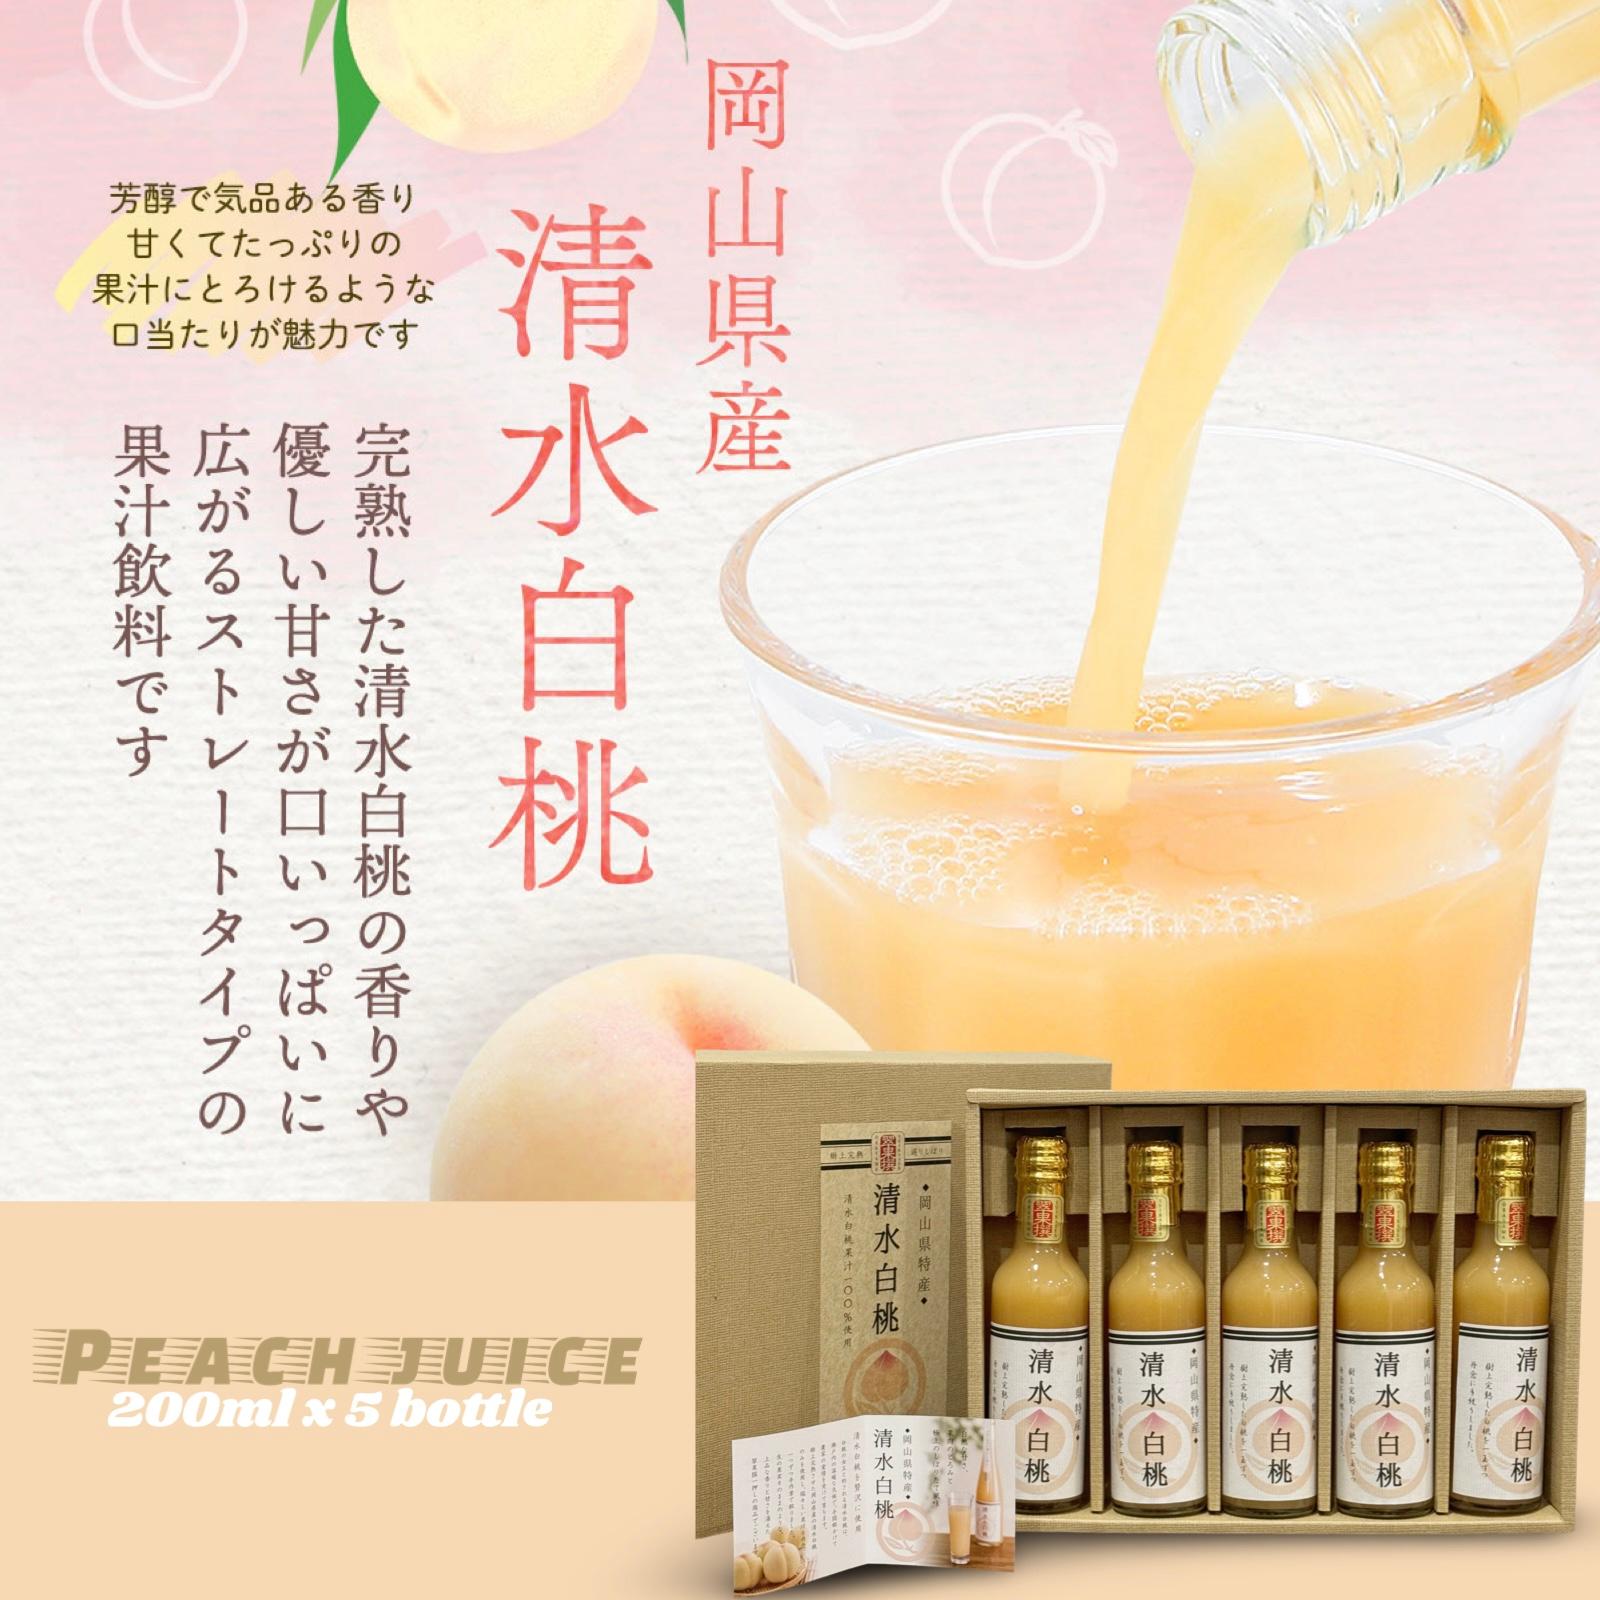 Japan Premium Peach juice gift box (5 bottles)